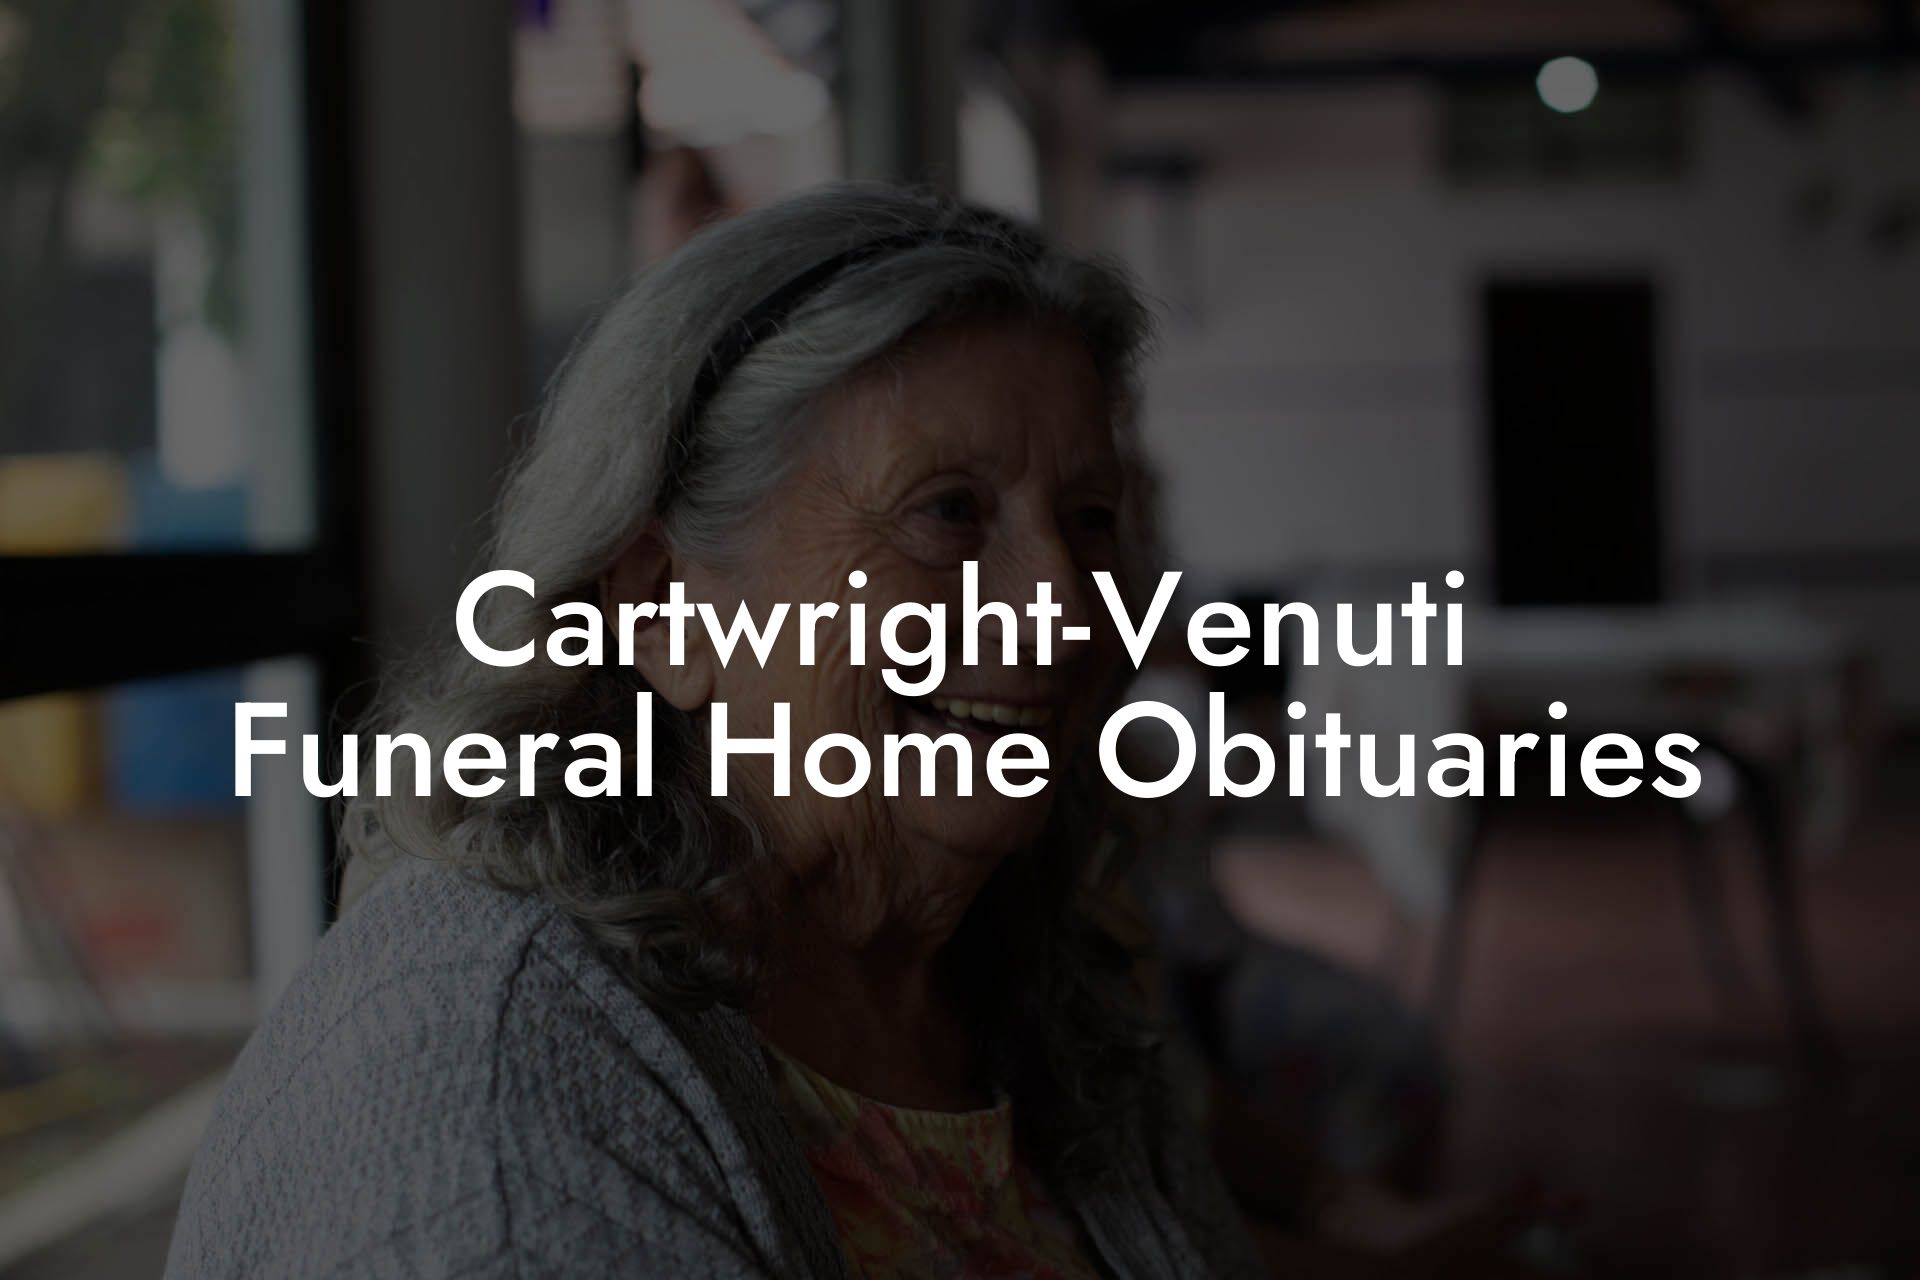 Cartwright-Venuti Funeral Home Obituaries